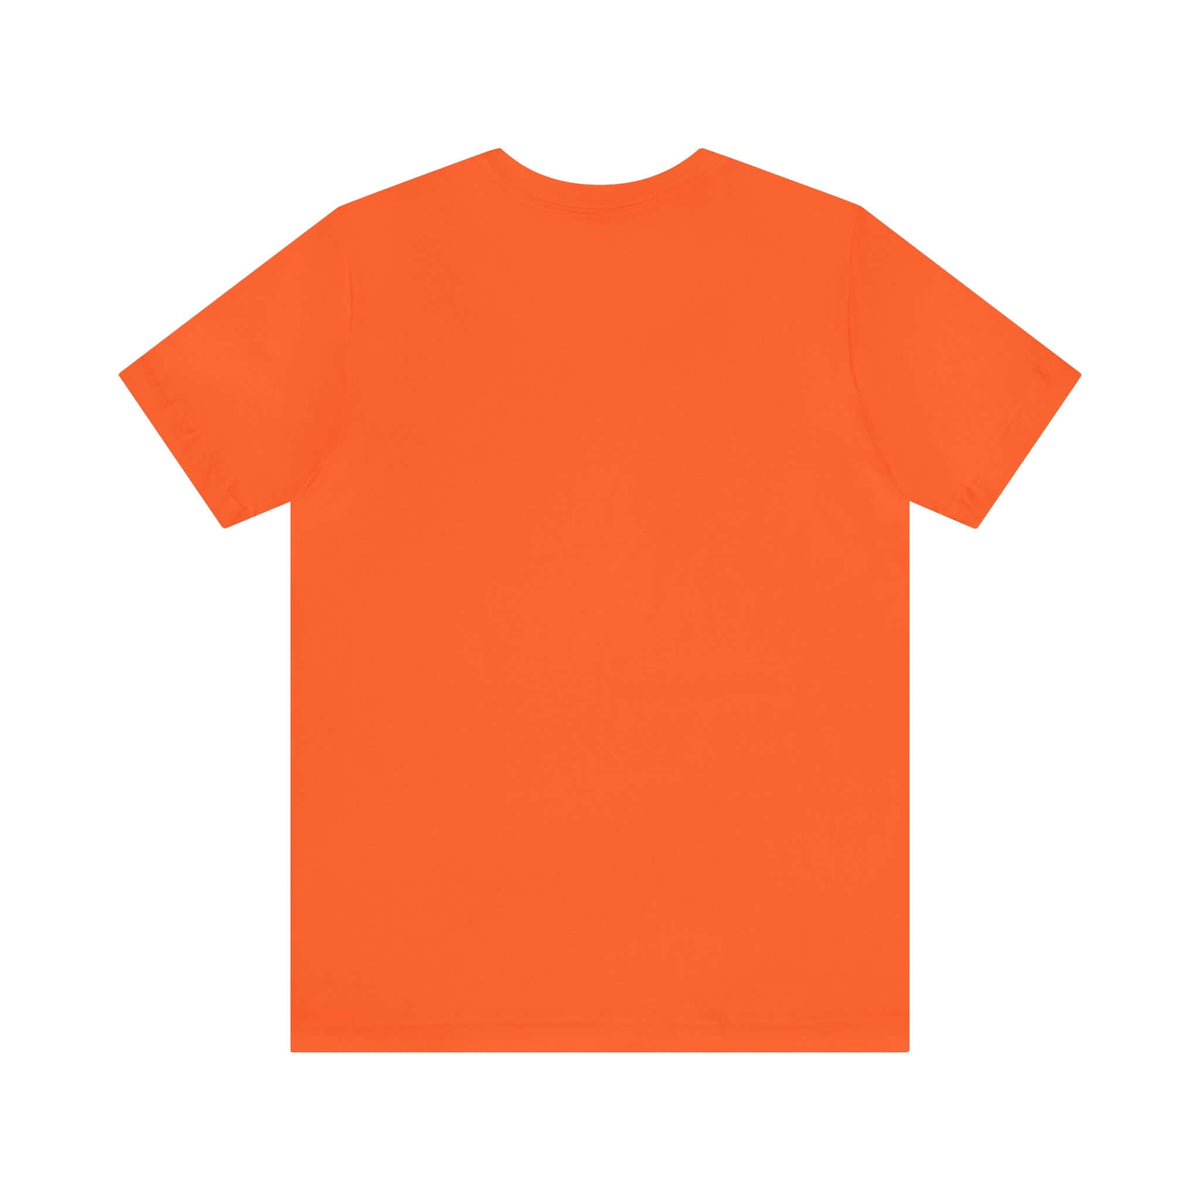 FLO T-Shirt (Stealth Logo)